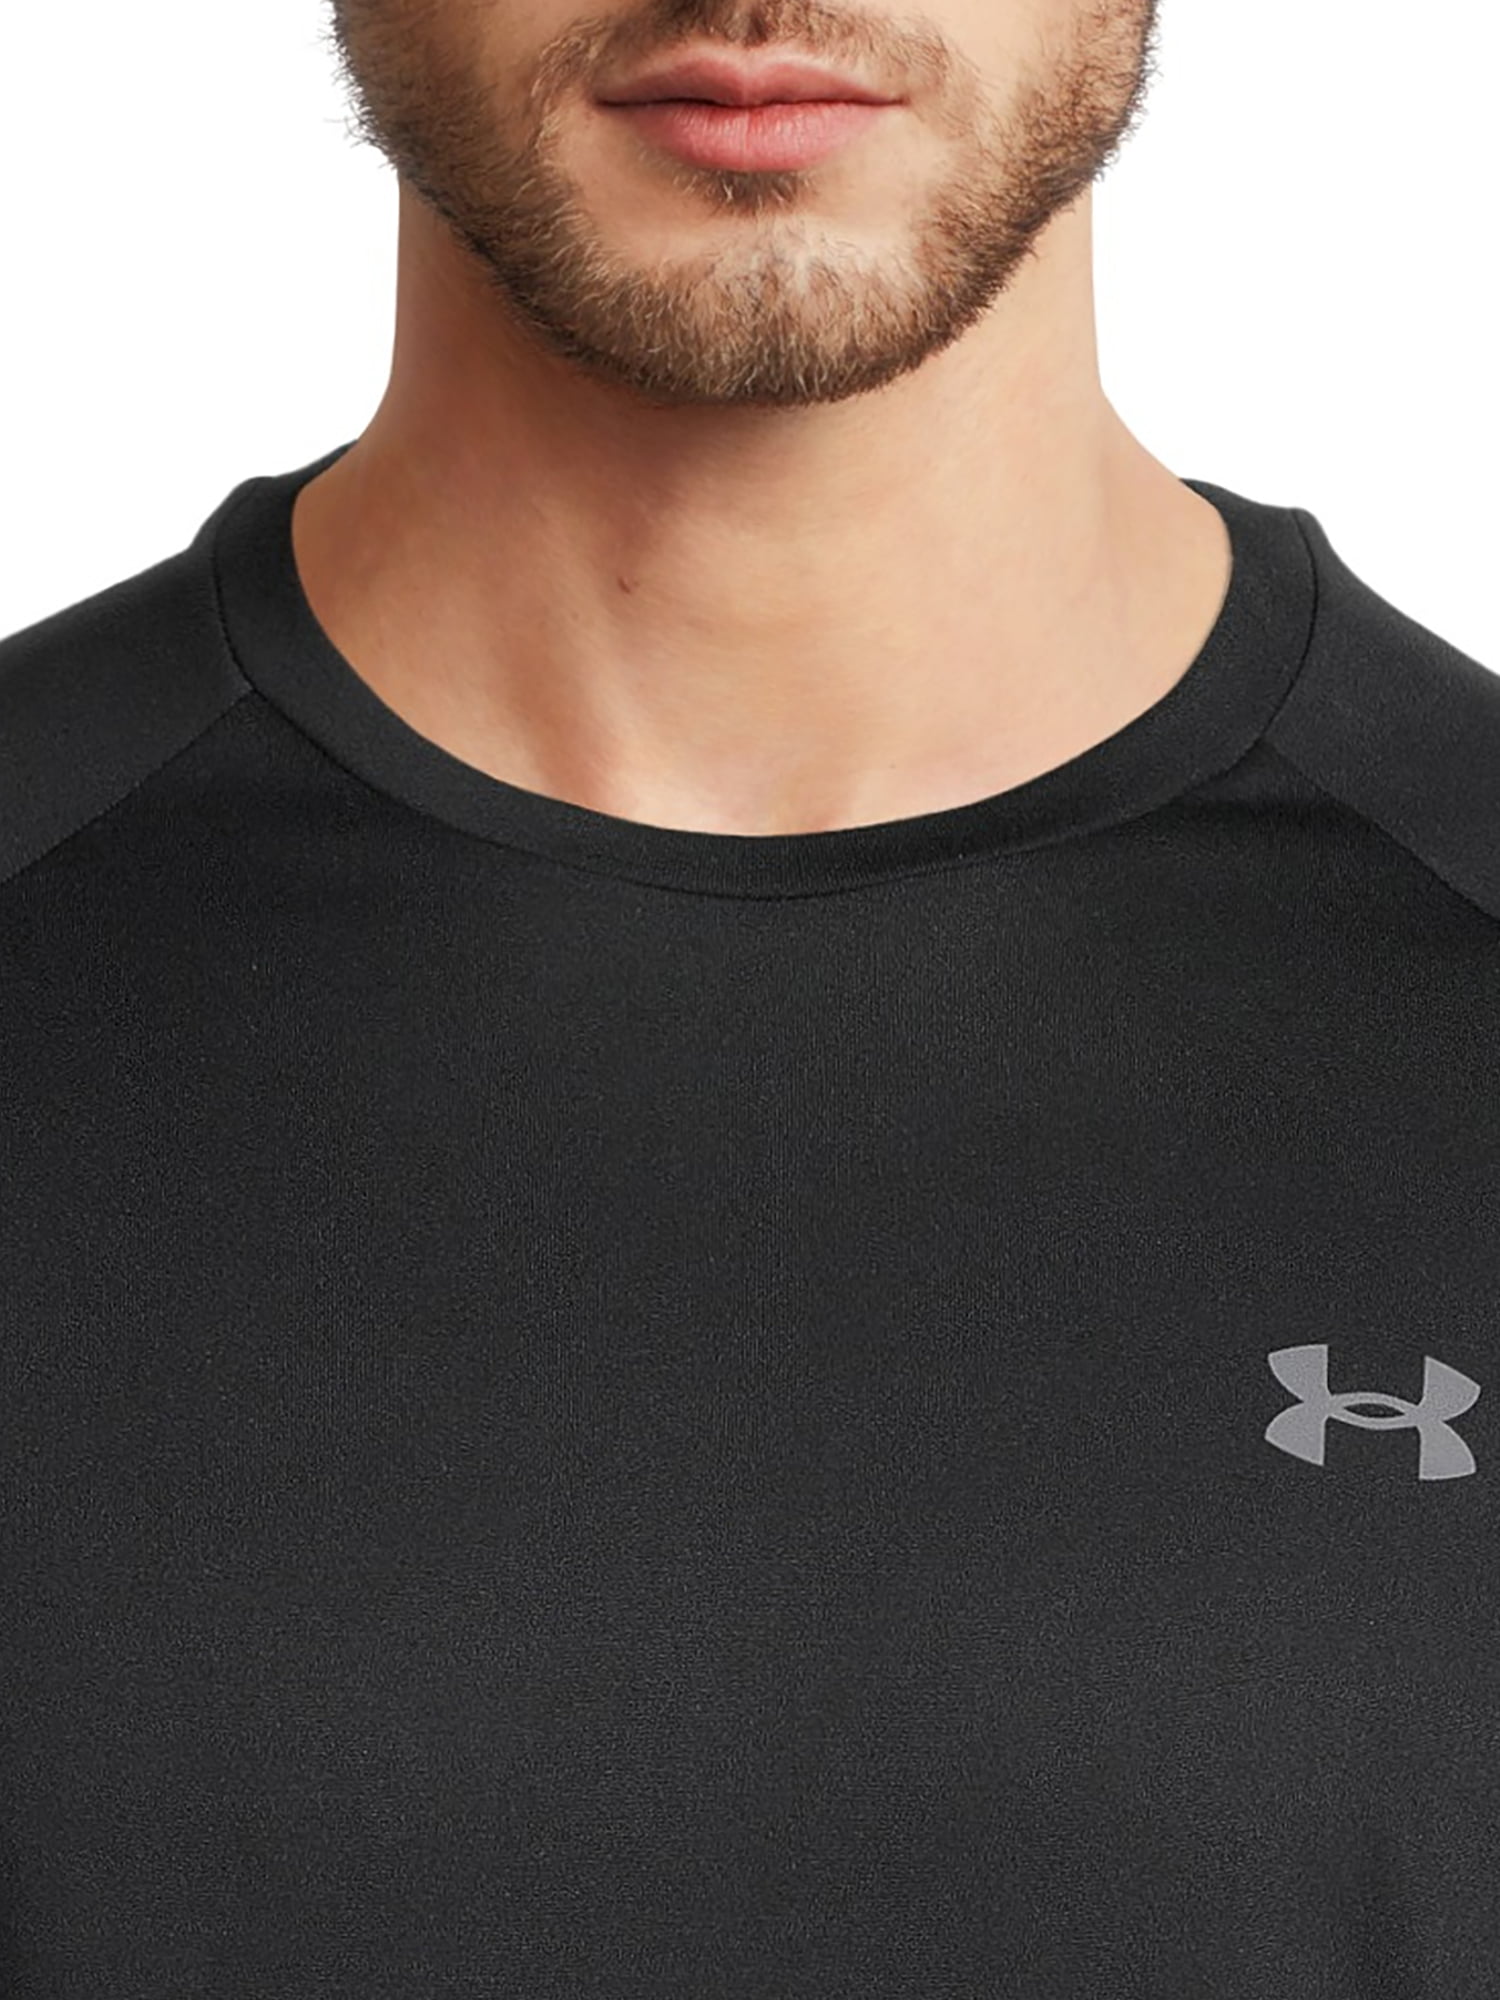 Men's Under Armour Black Bradley Braves Tech Performance T-Shirt Size: Small